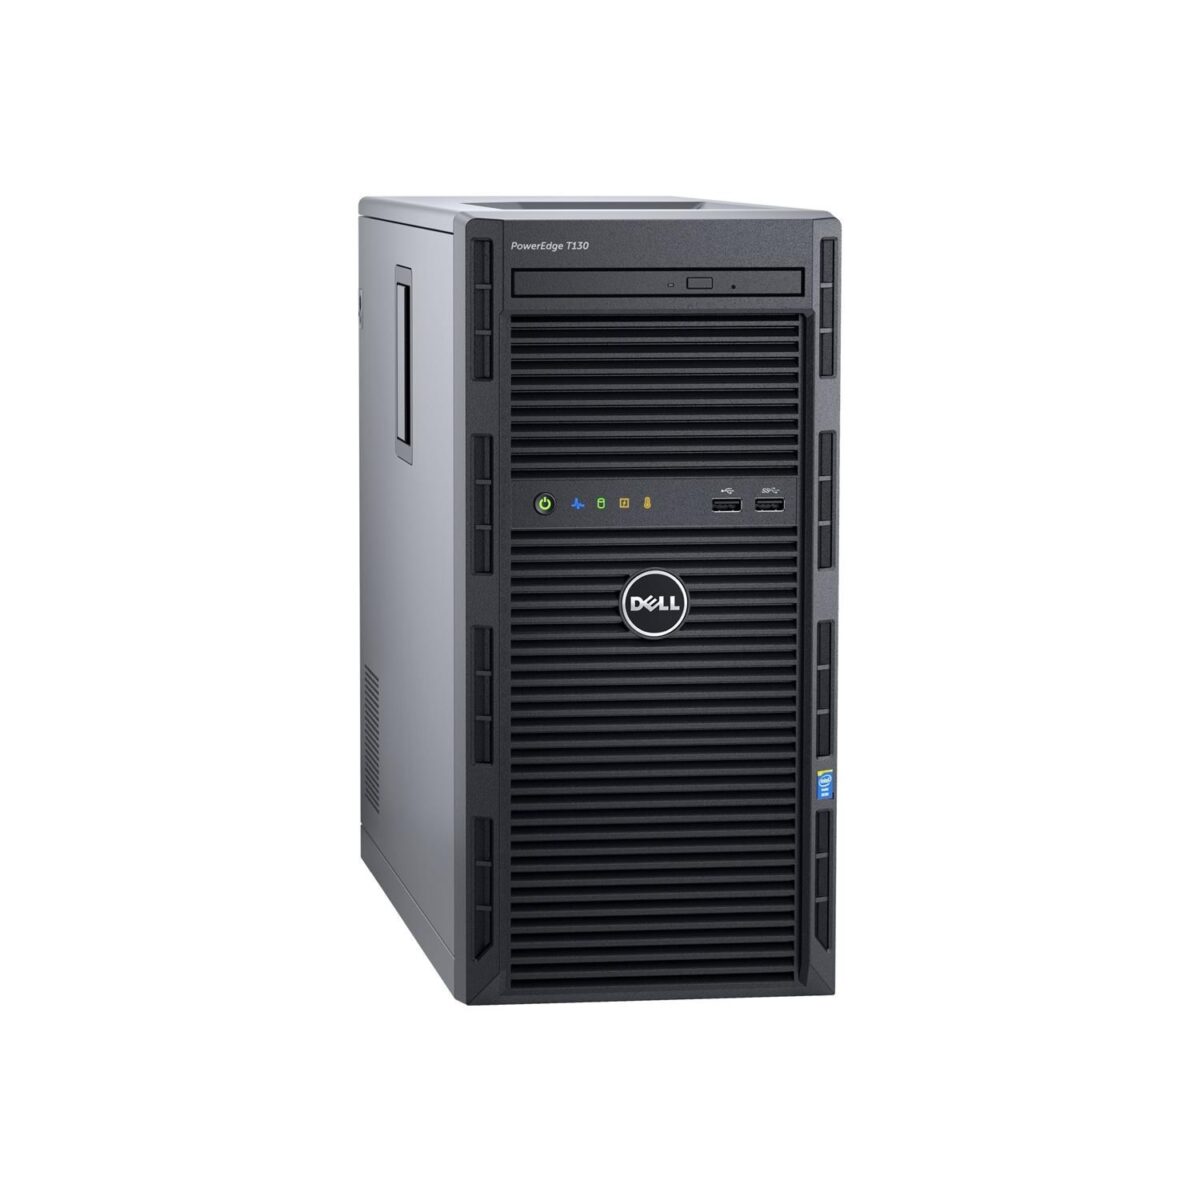 Dell PowerEdge T130 Intel Xeon E3-1220 V6 Server